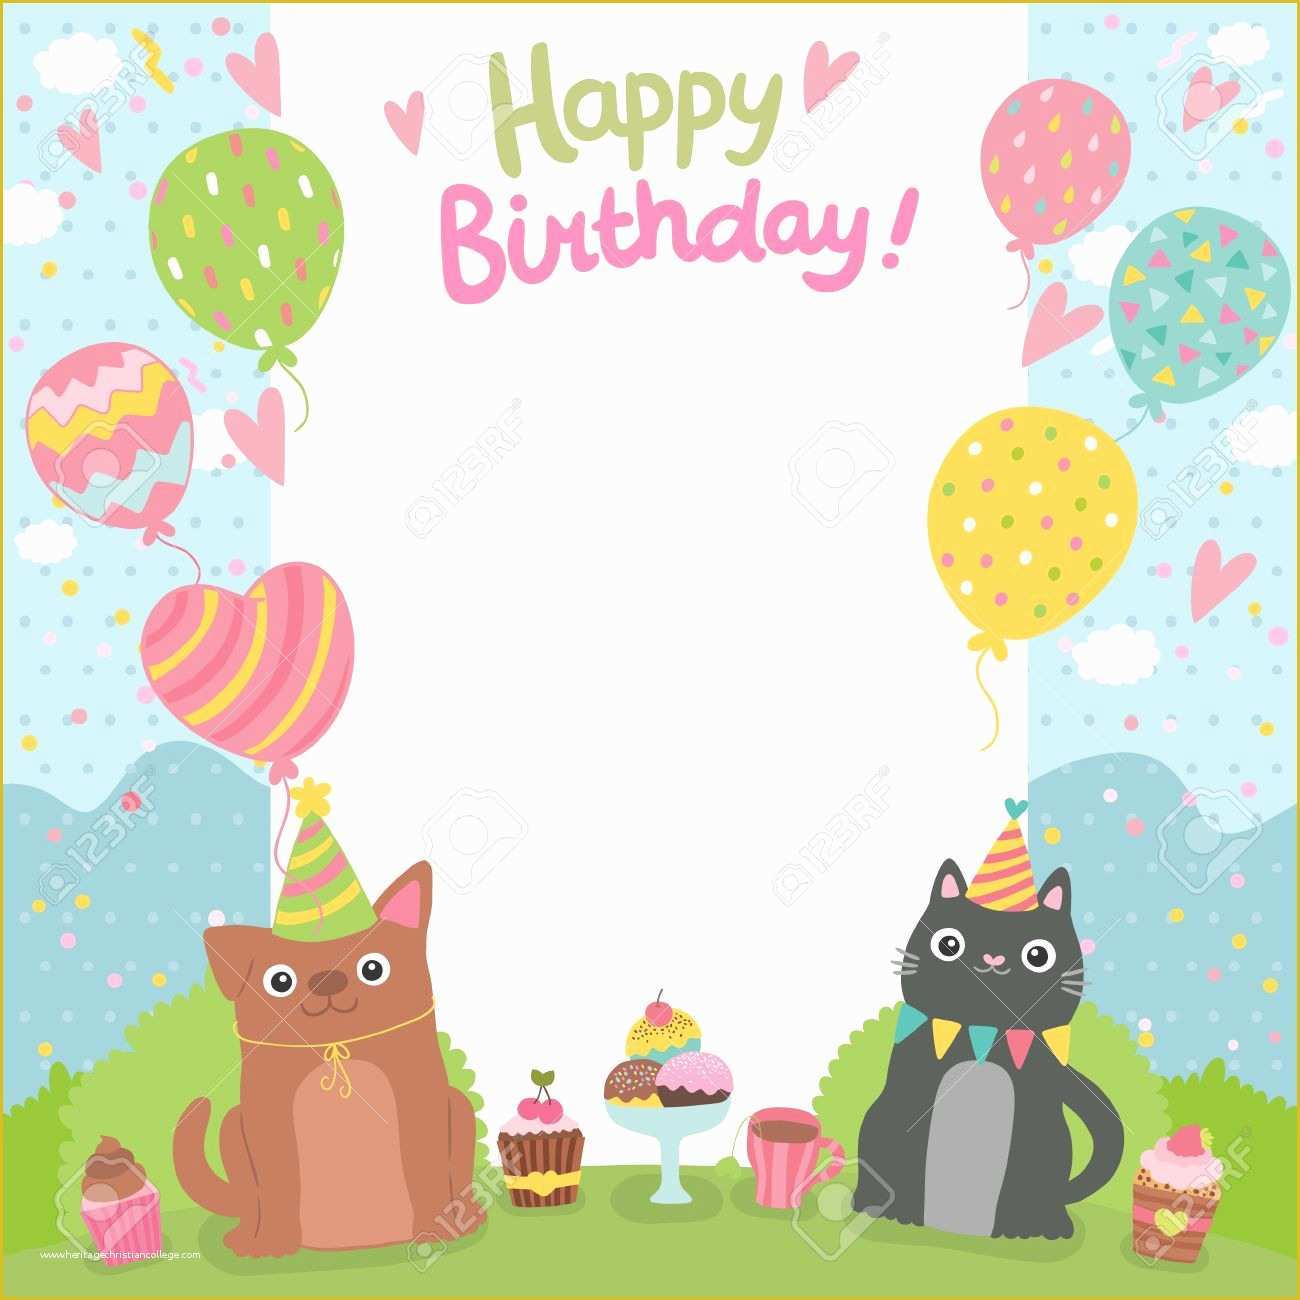 Free Birthday Templates with Photo Of Happy Birthday Card Template Regarding Happy Birthday Card